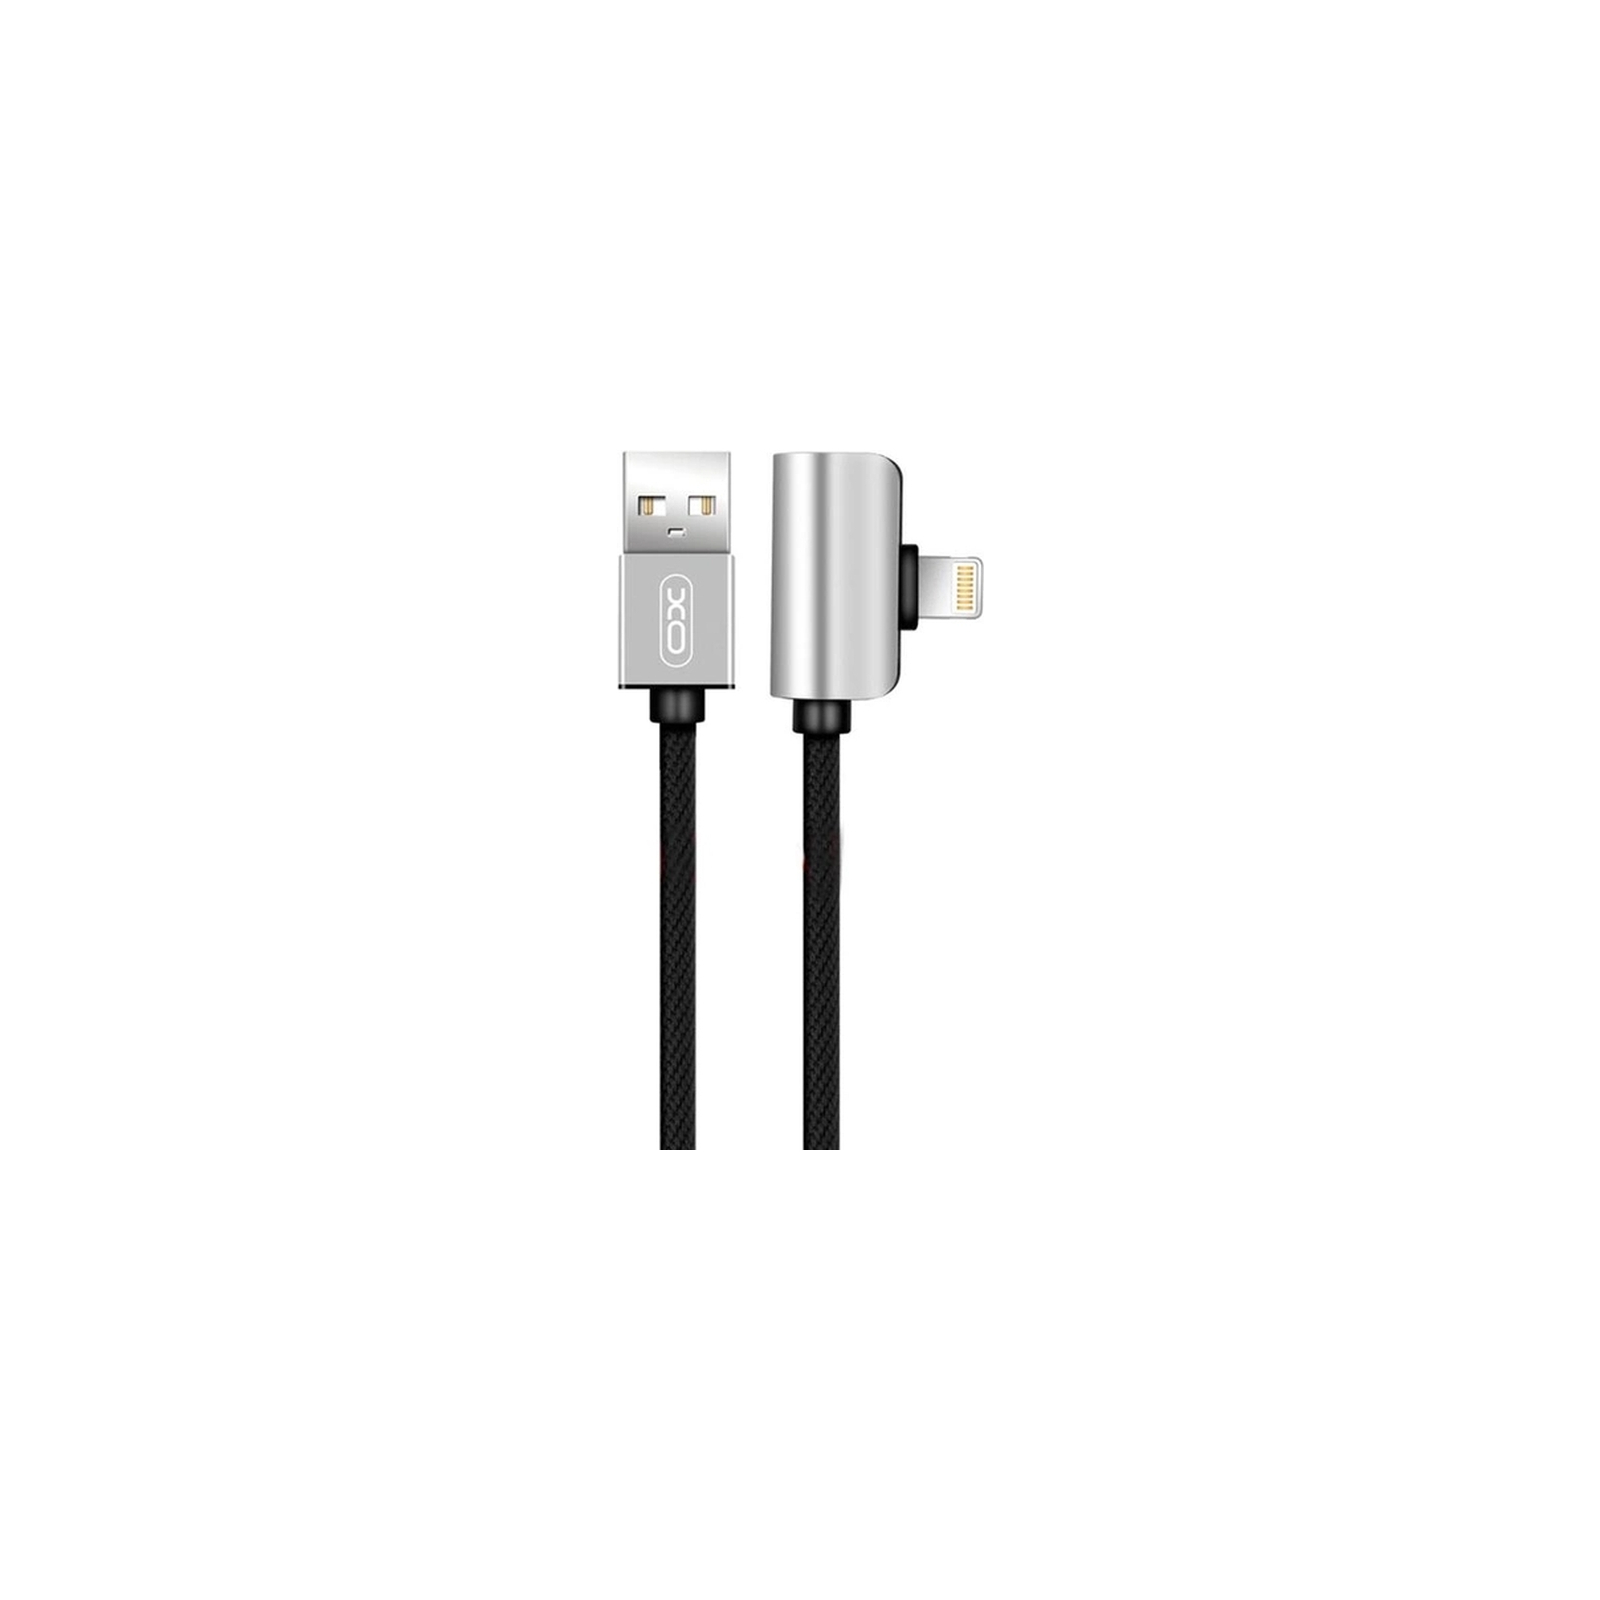 Дата кабель NB46 2in1 USB - Lightning + Lightning Audio 2.4А 1.0m Silver XoKo (XO-NB46)